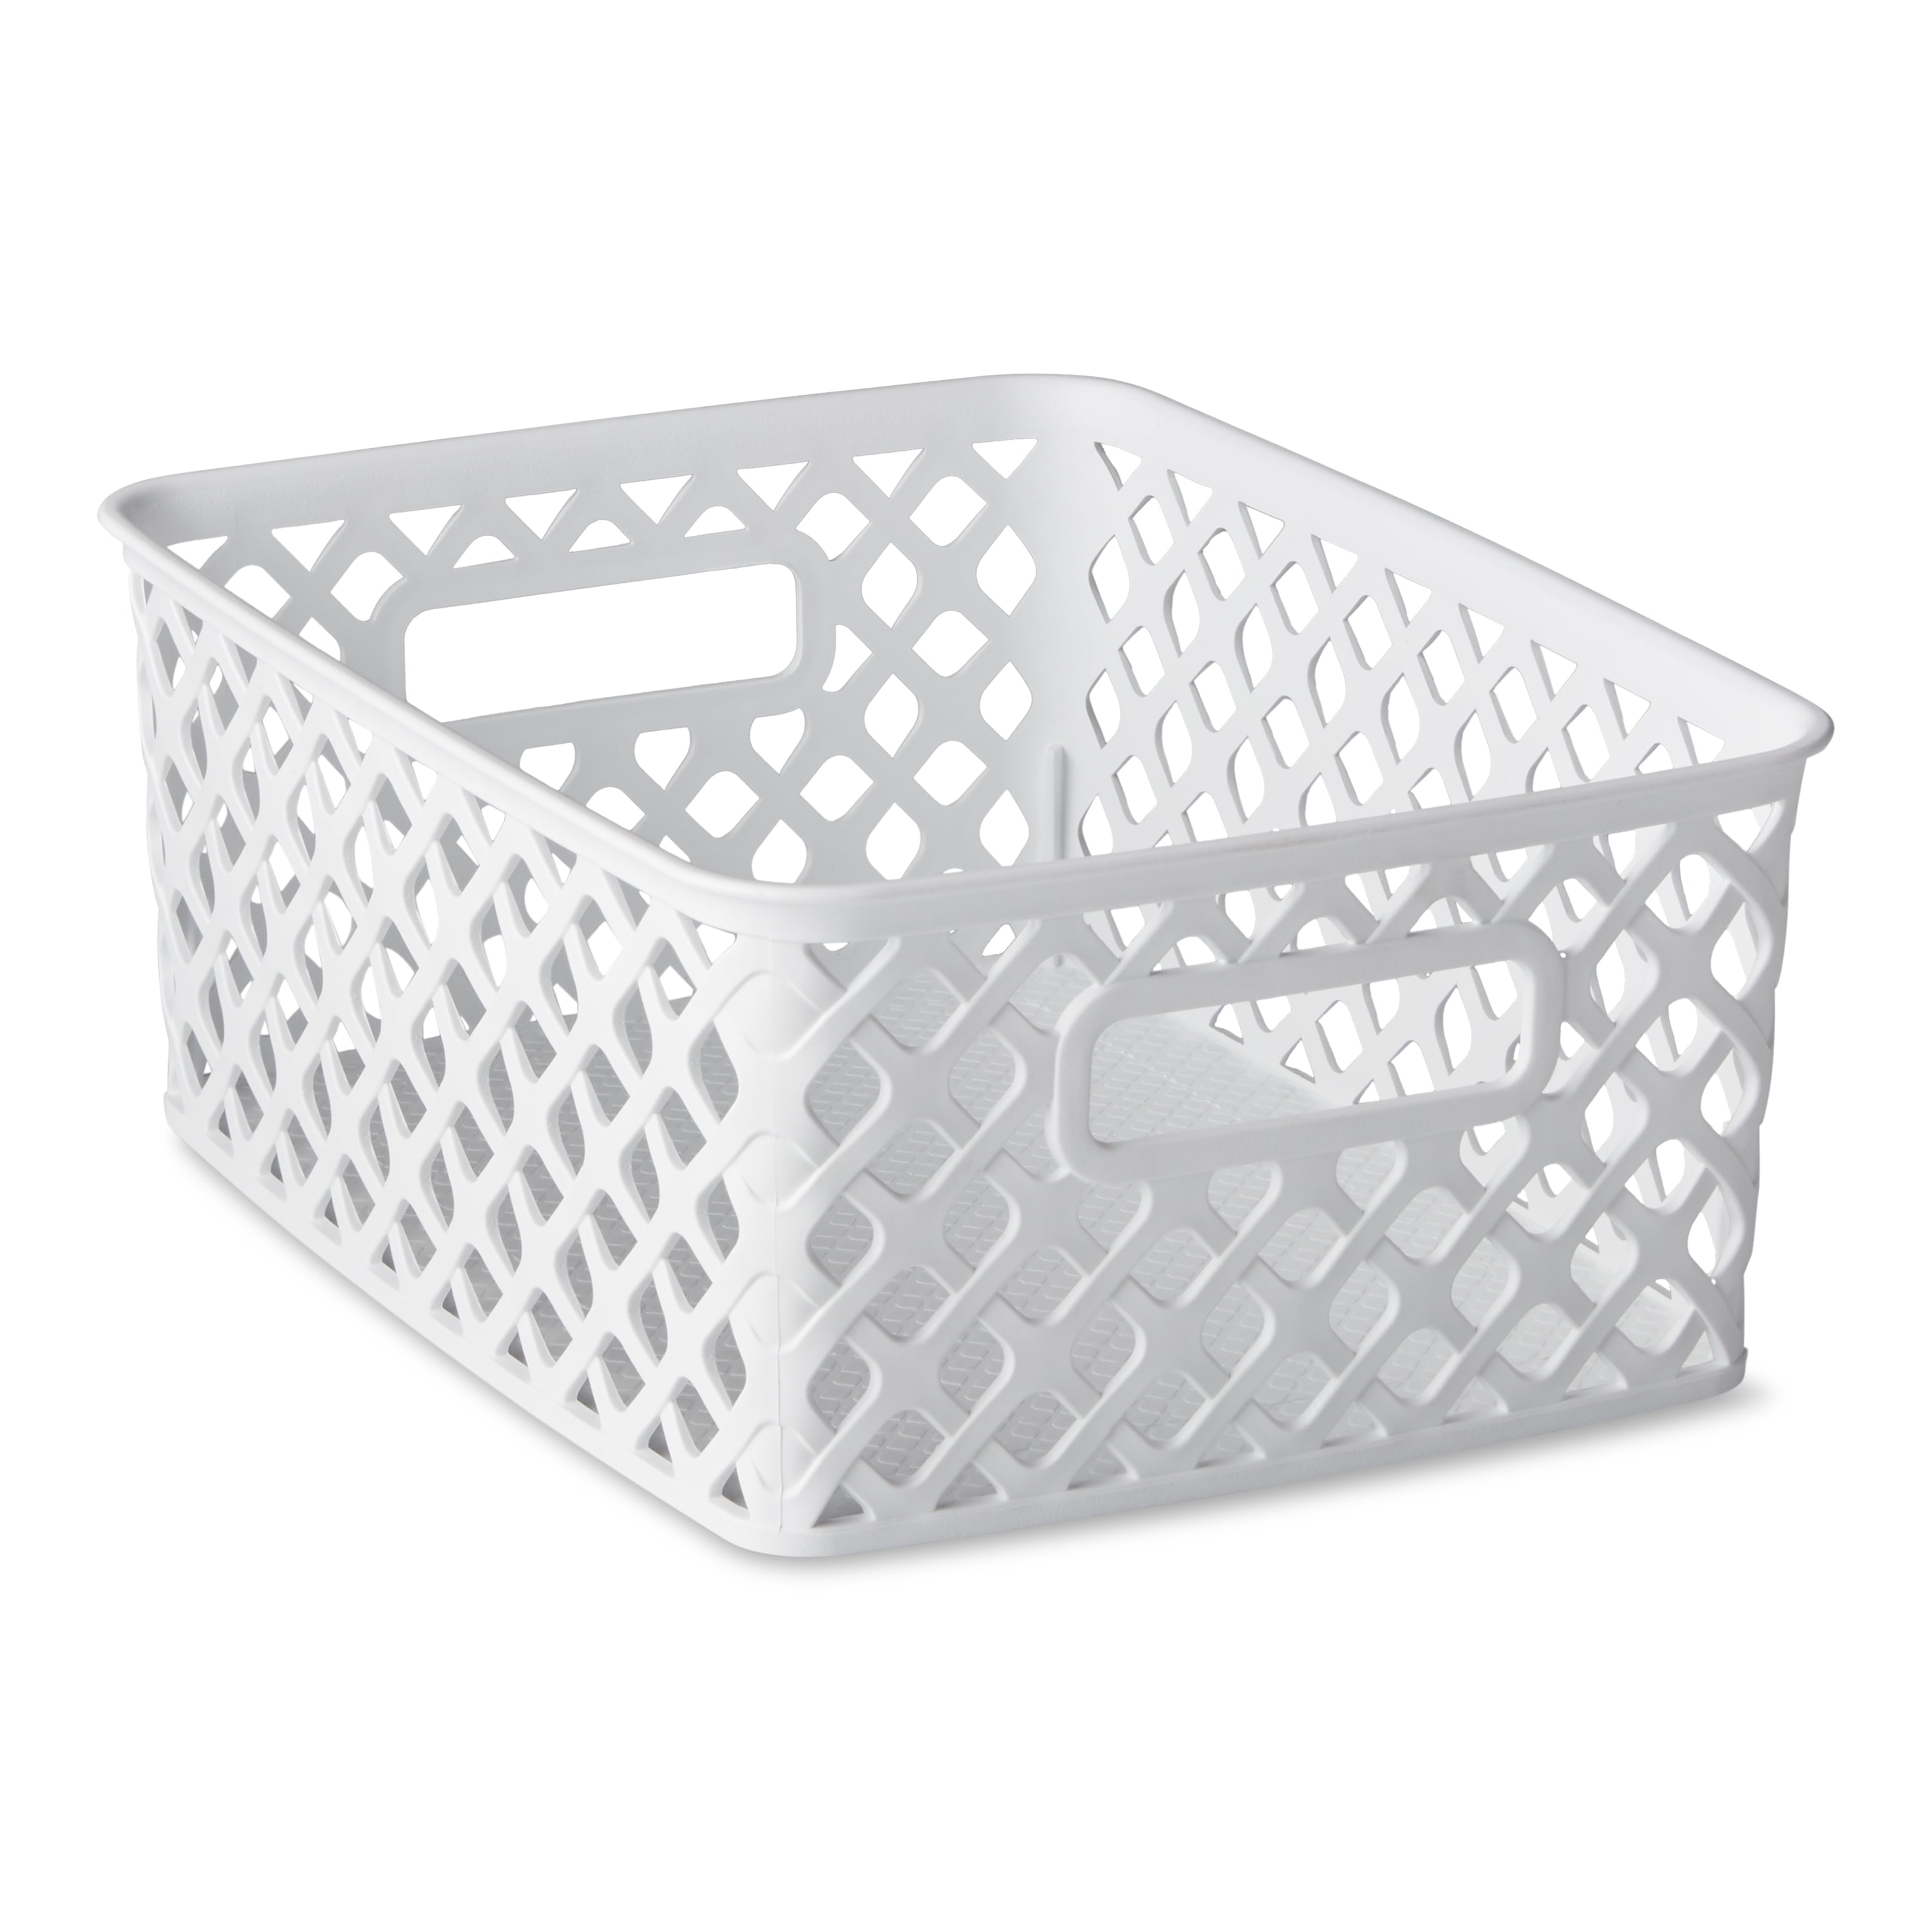 White Large Plastic Weave Basket, 13 x 11 Inches, Mardel